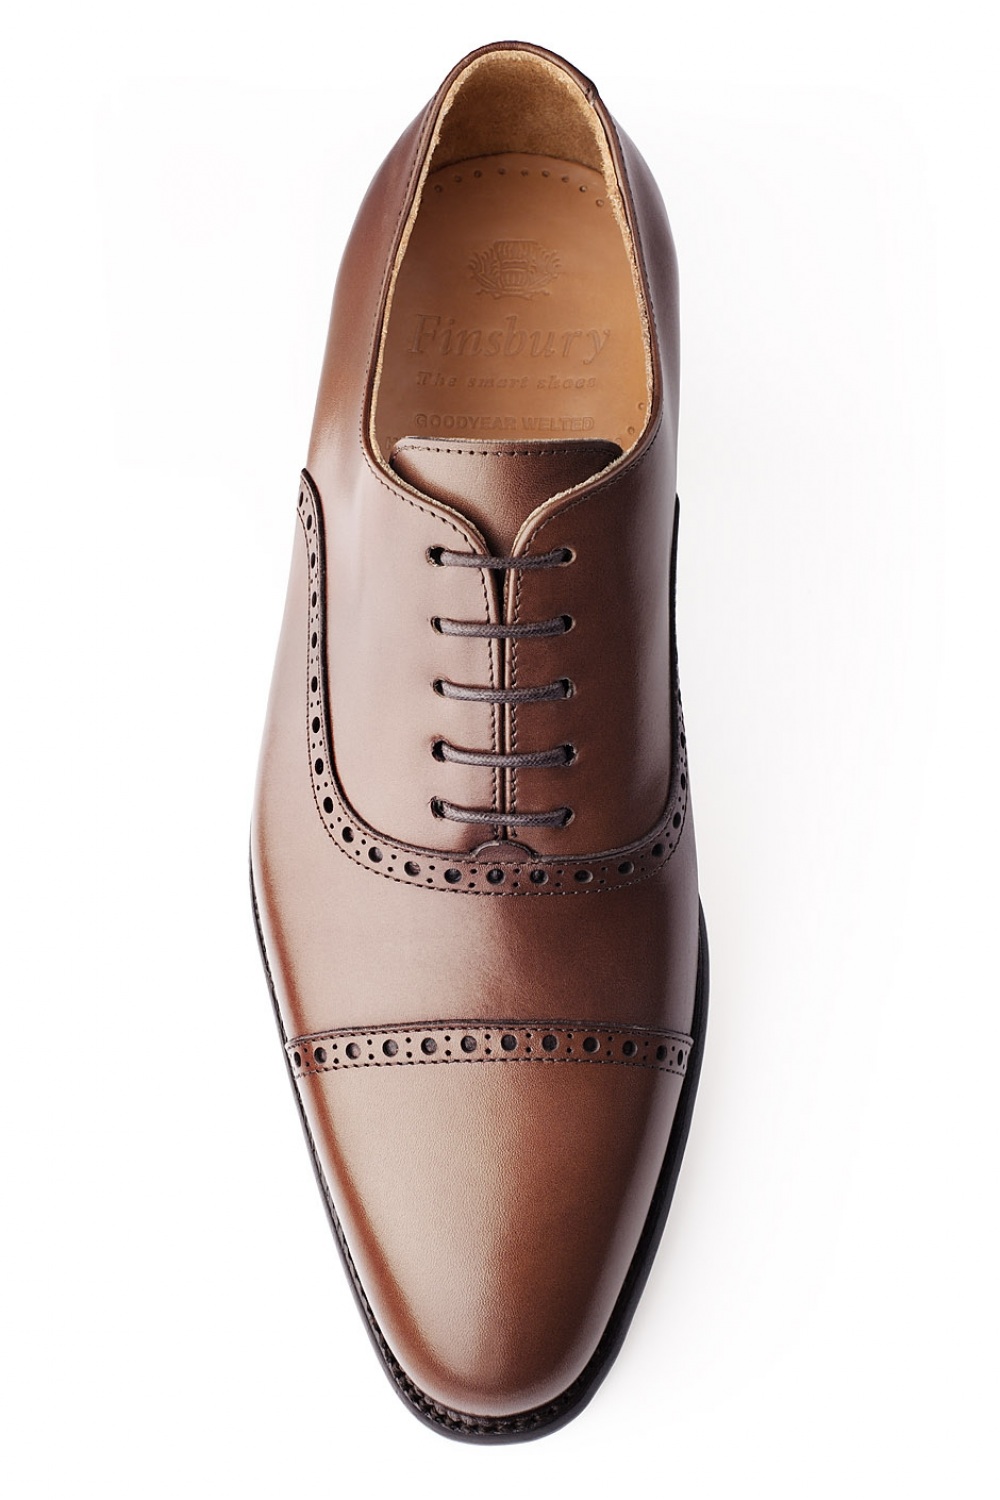 Balmoral Cognac Men's Oxford Shoe - Finsbury Shoes